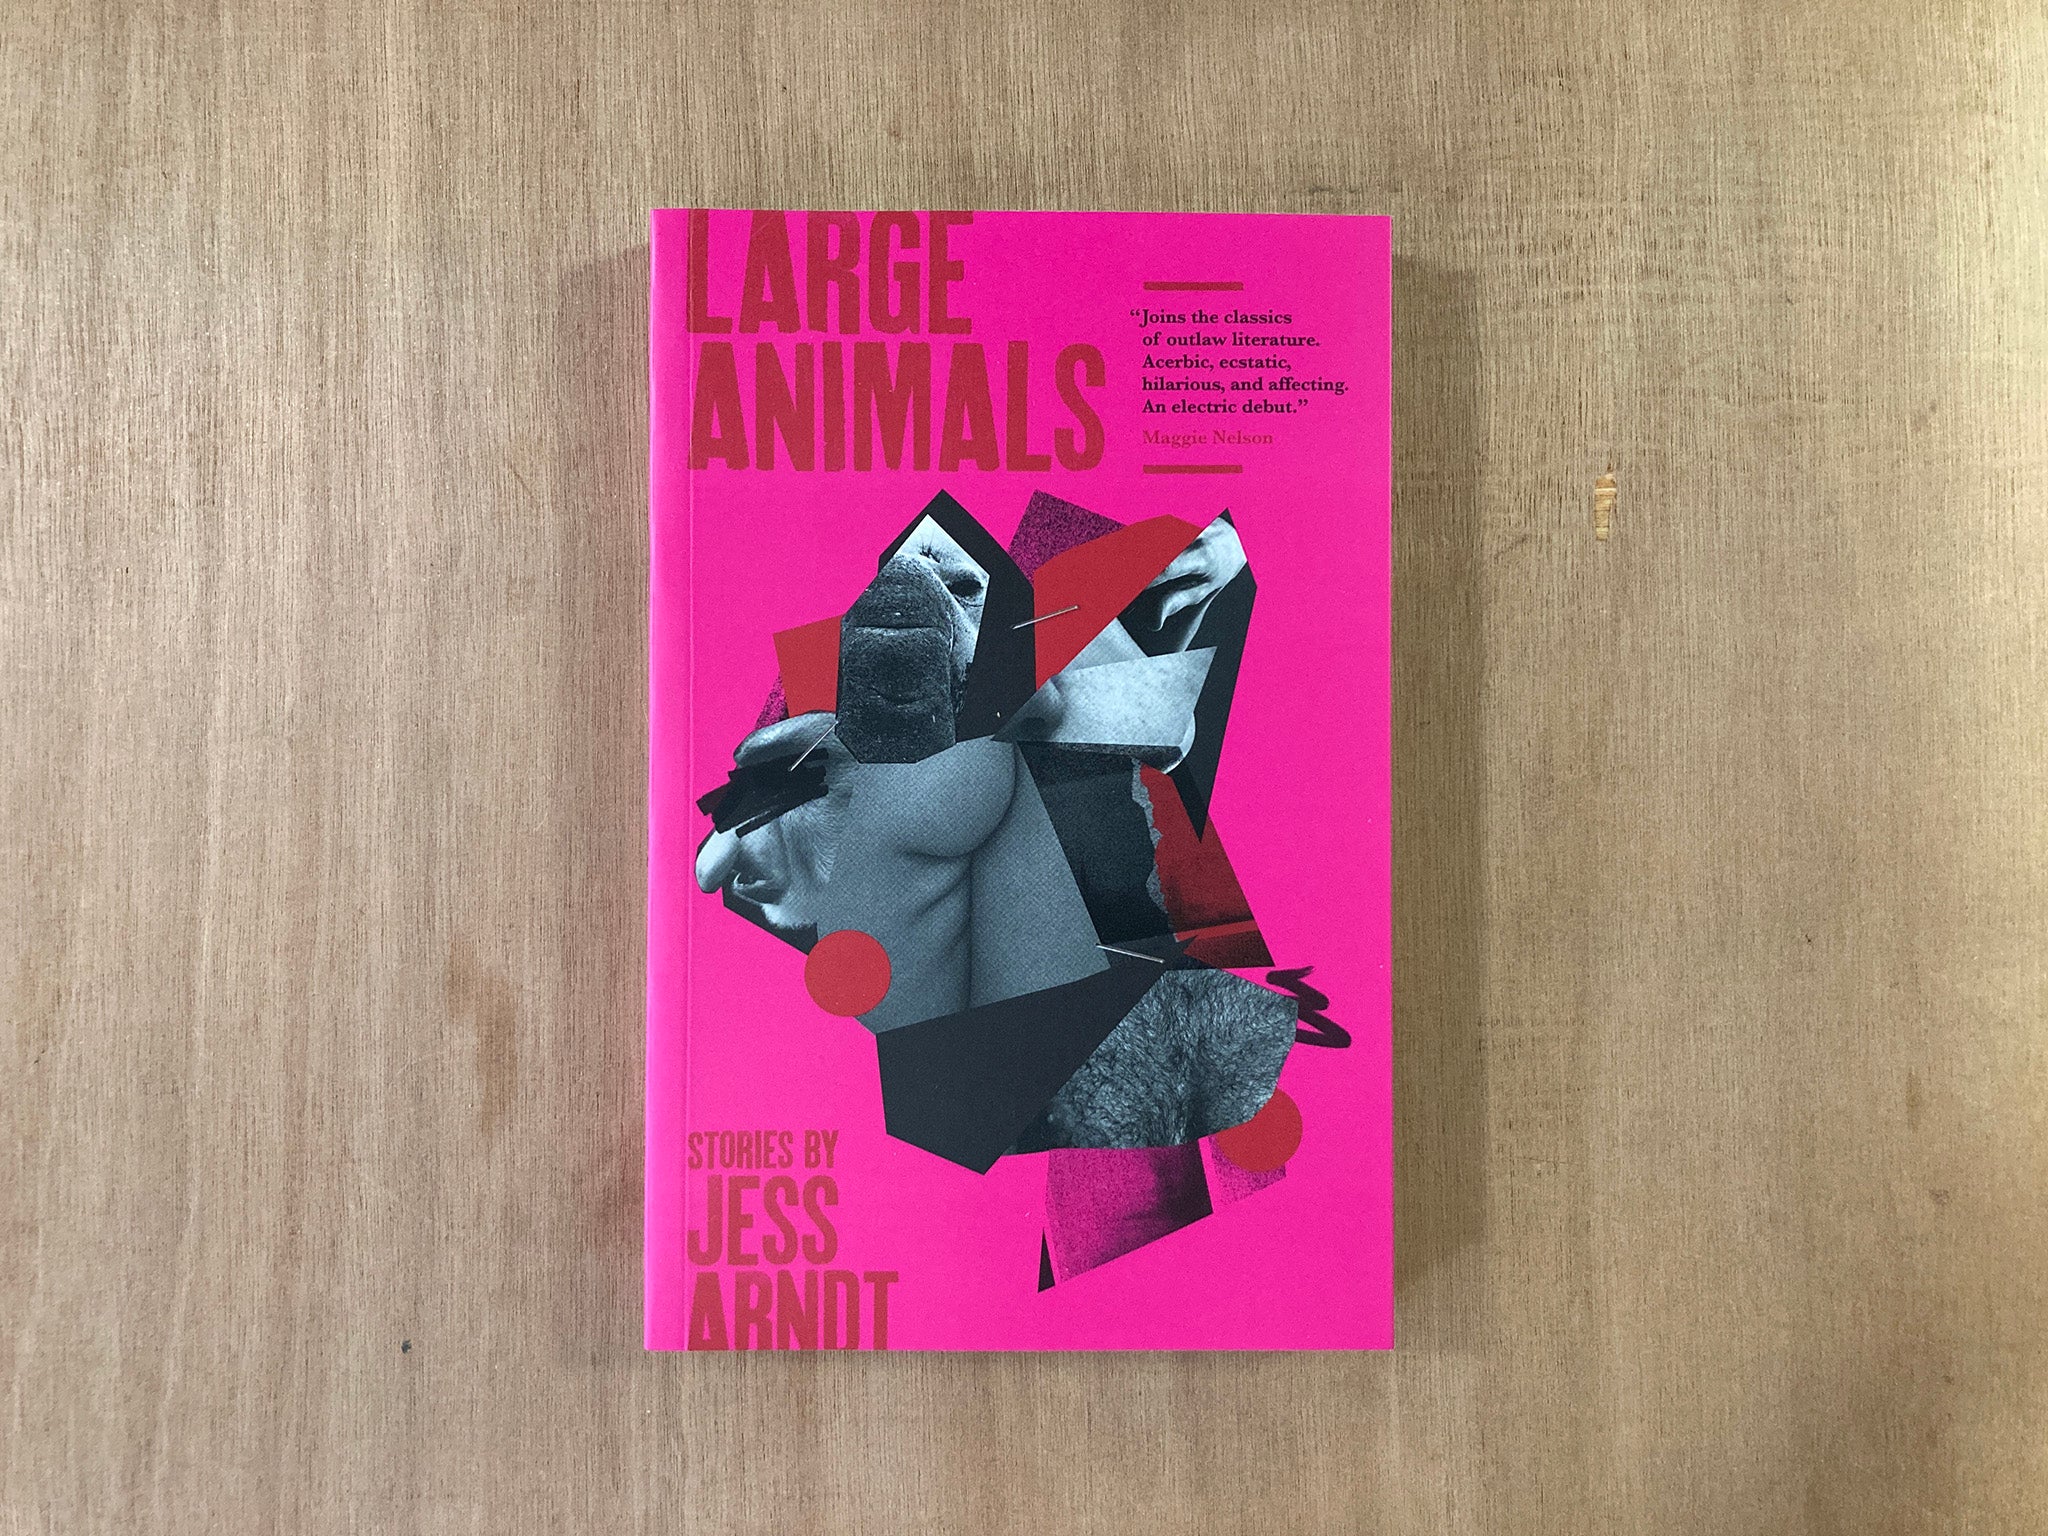 LARGE ANIMALS by Jess Arnott